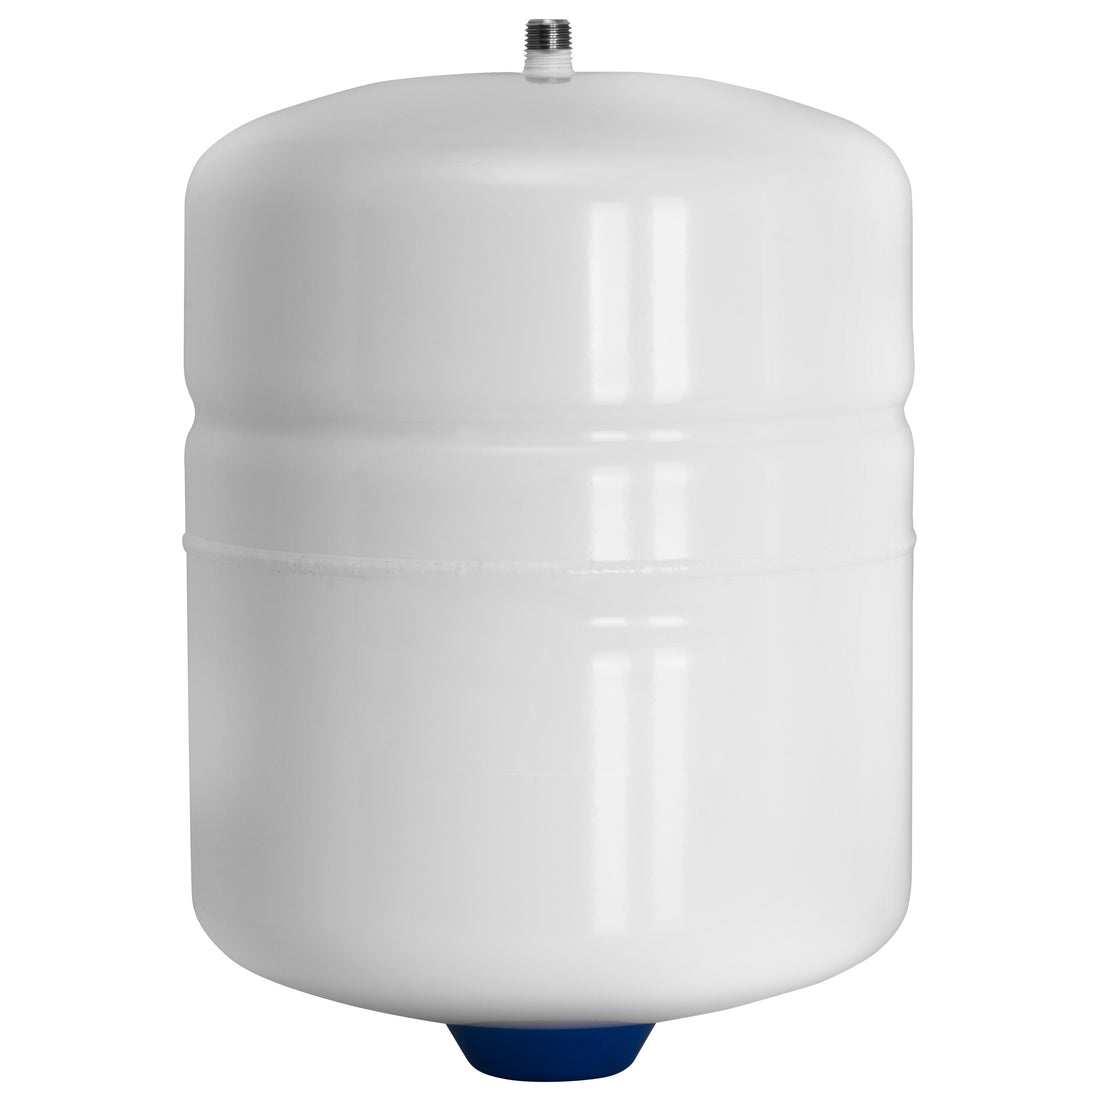 Aquatrol 2-Gallon Capacity Pre-Pressurized Water Storage Tank - White